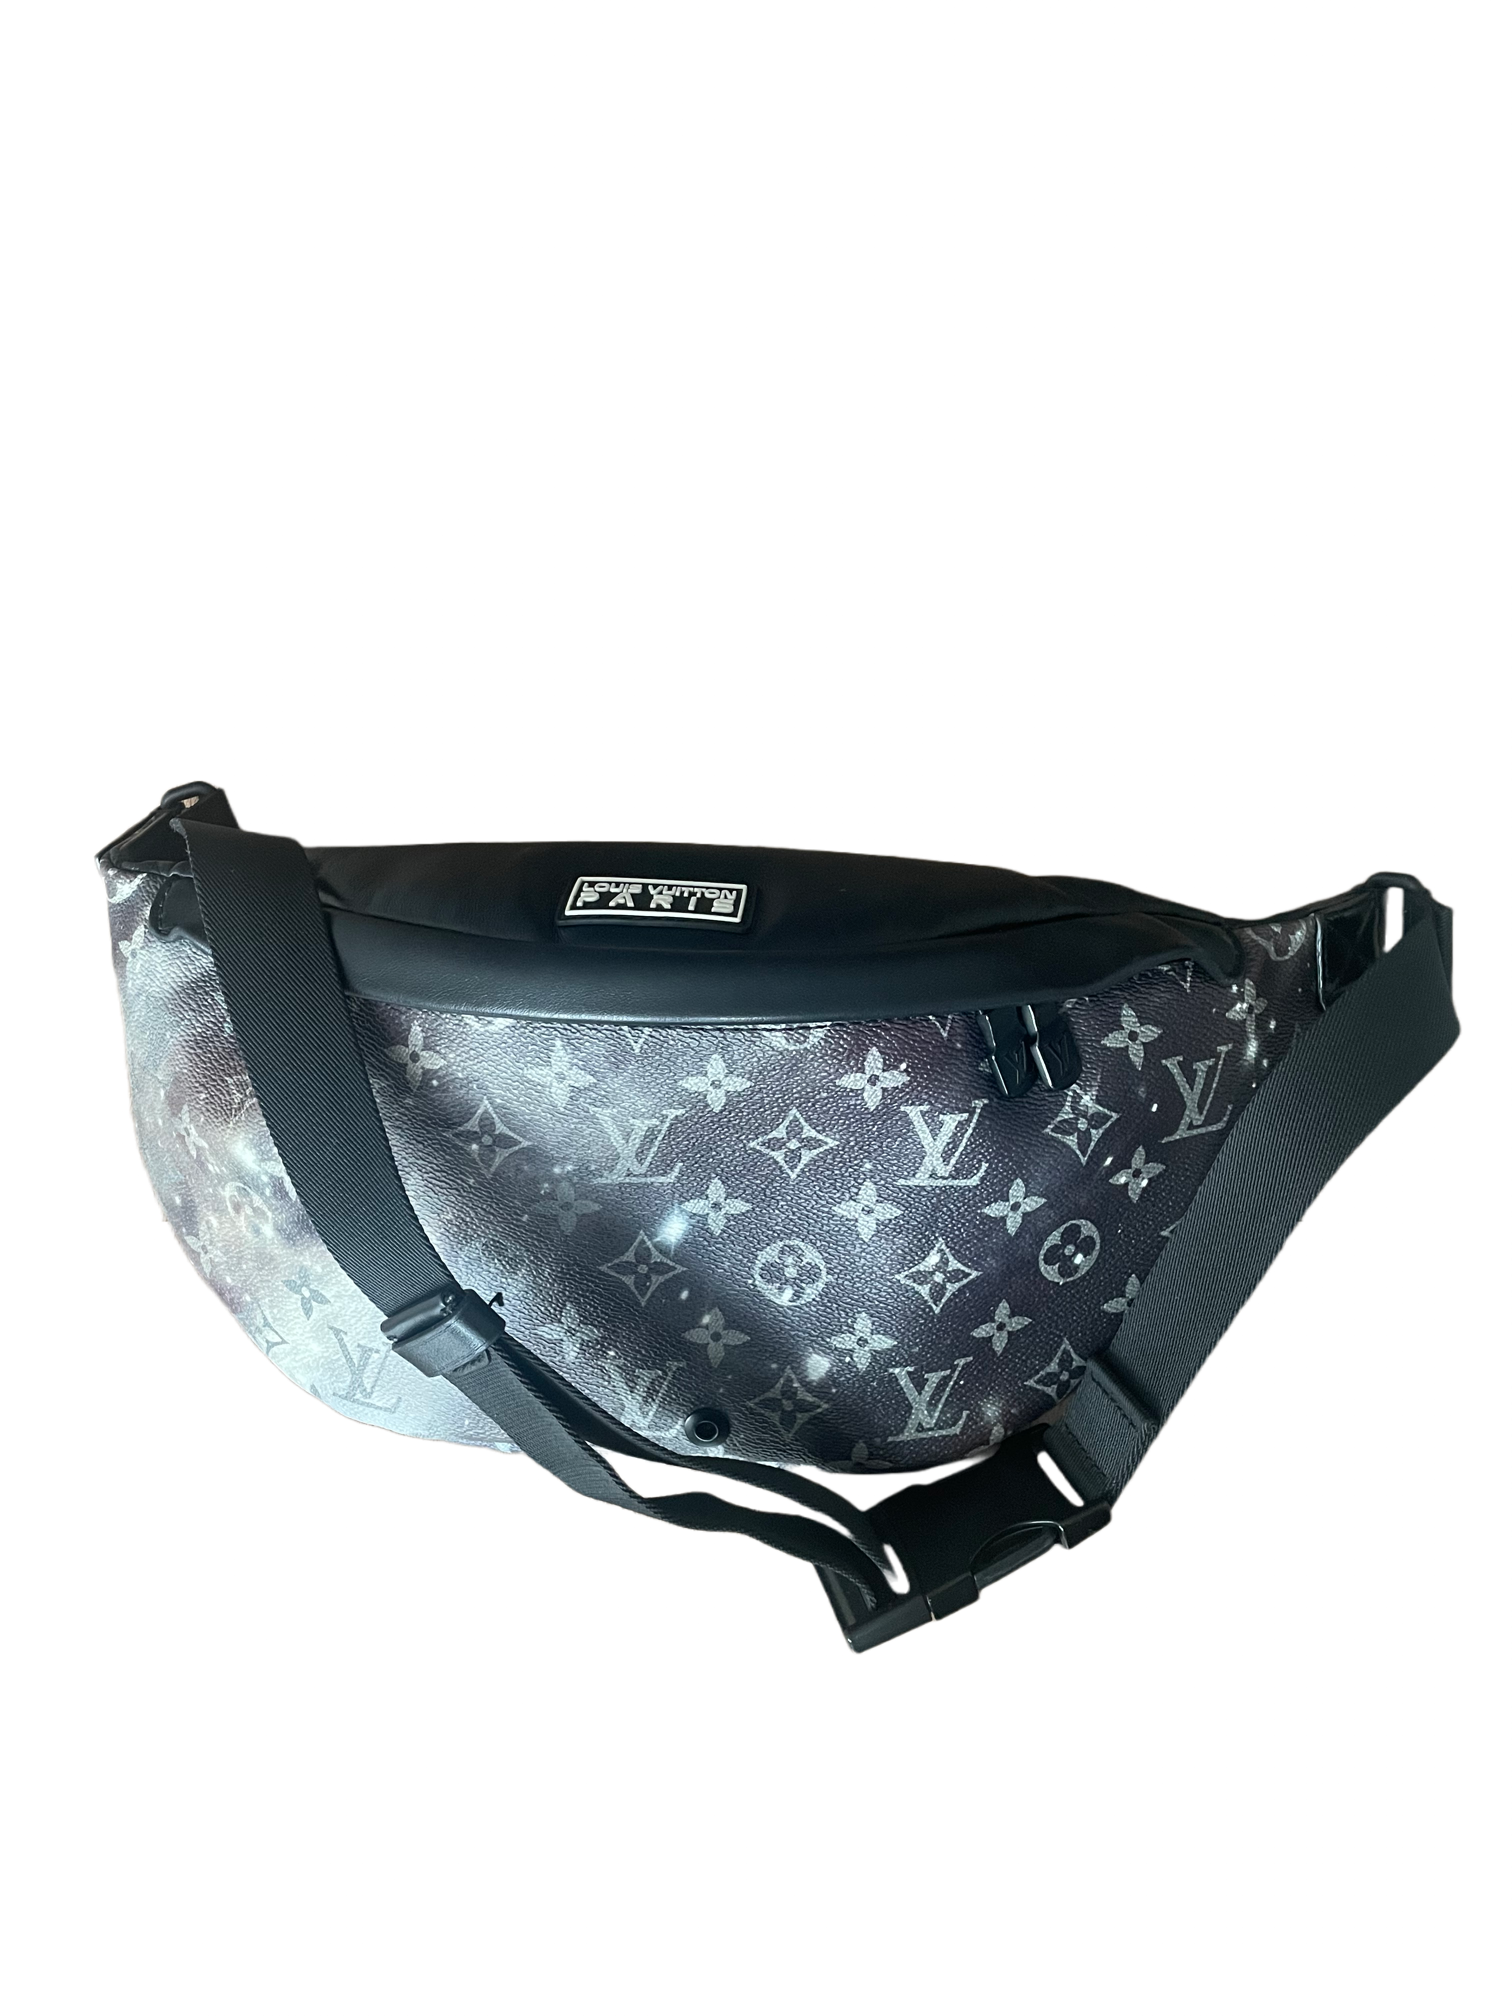 Louis Vuitton LV belt bag in new silver nylon